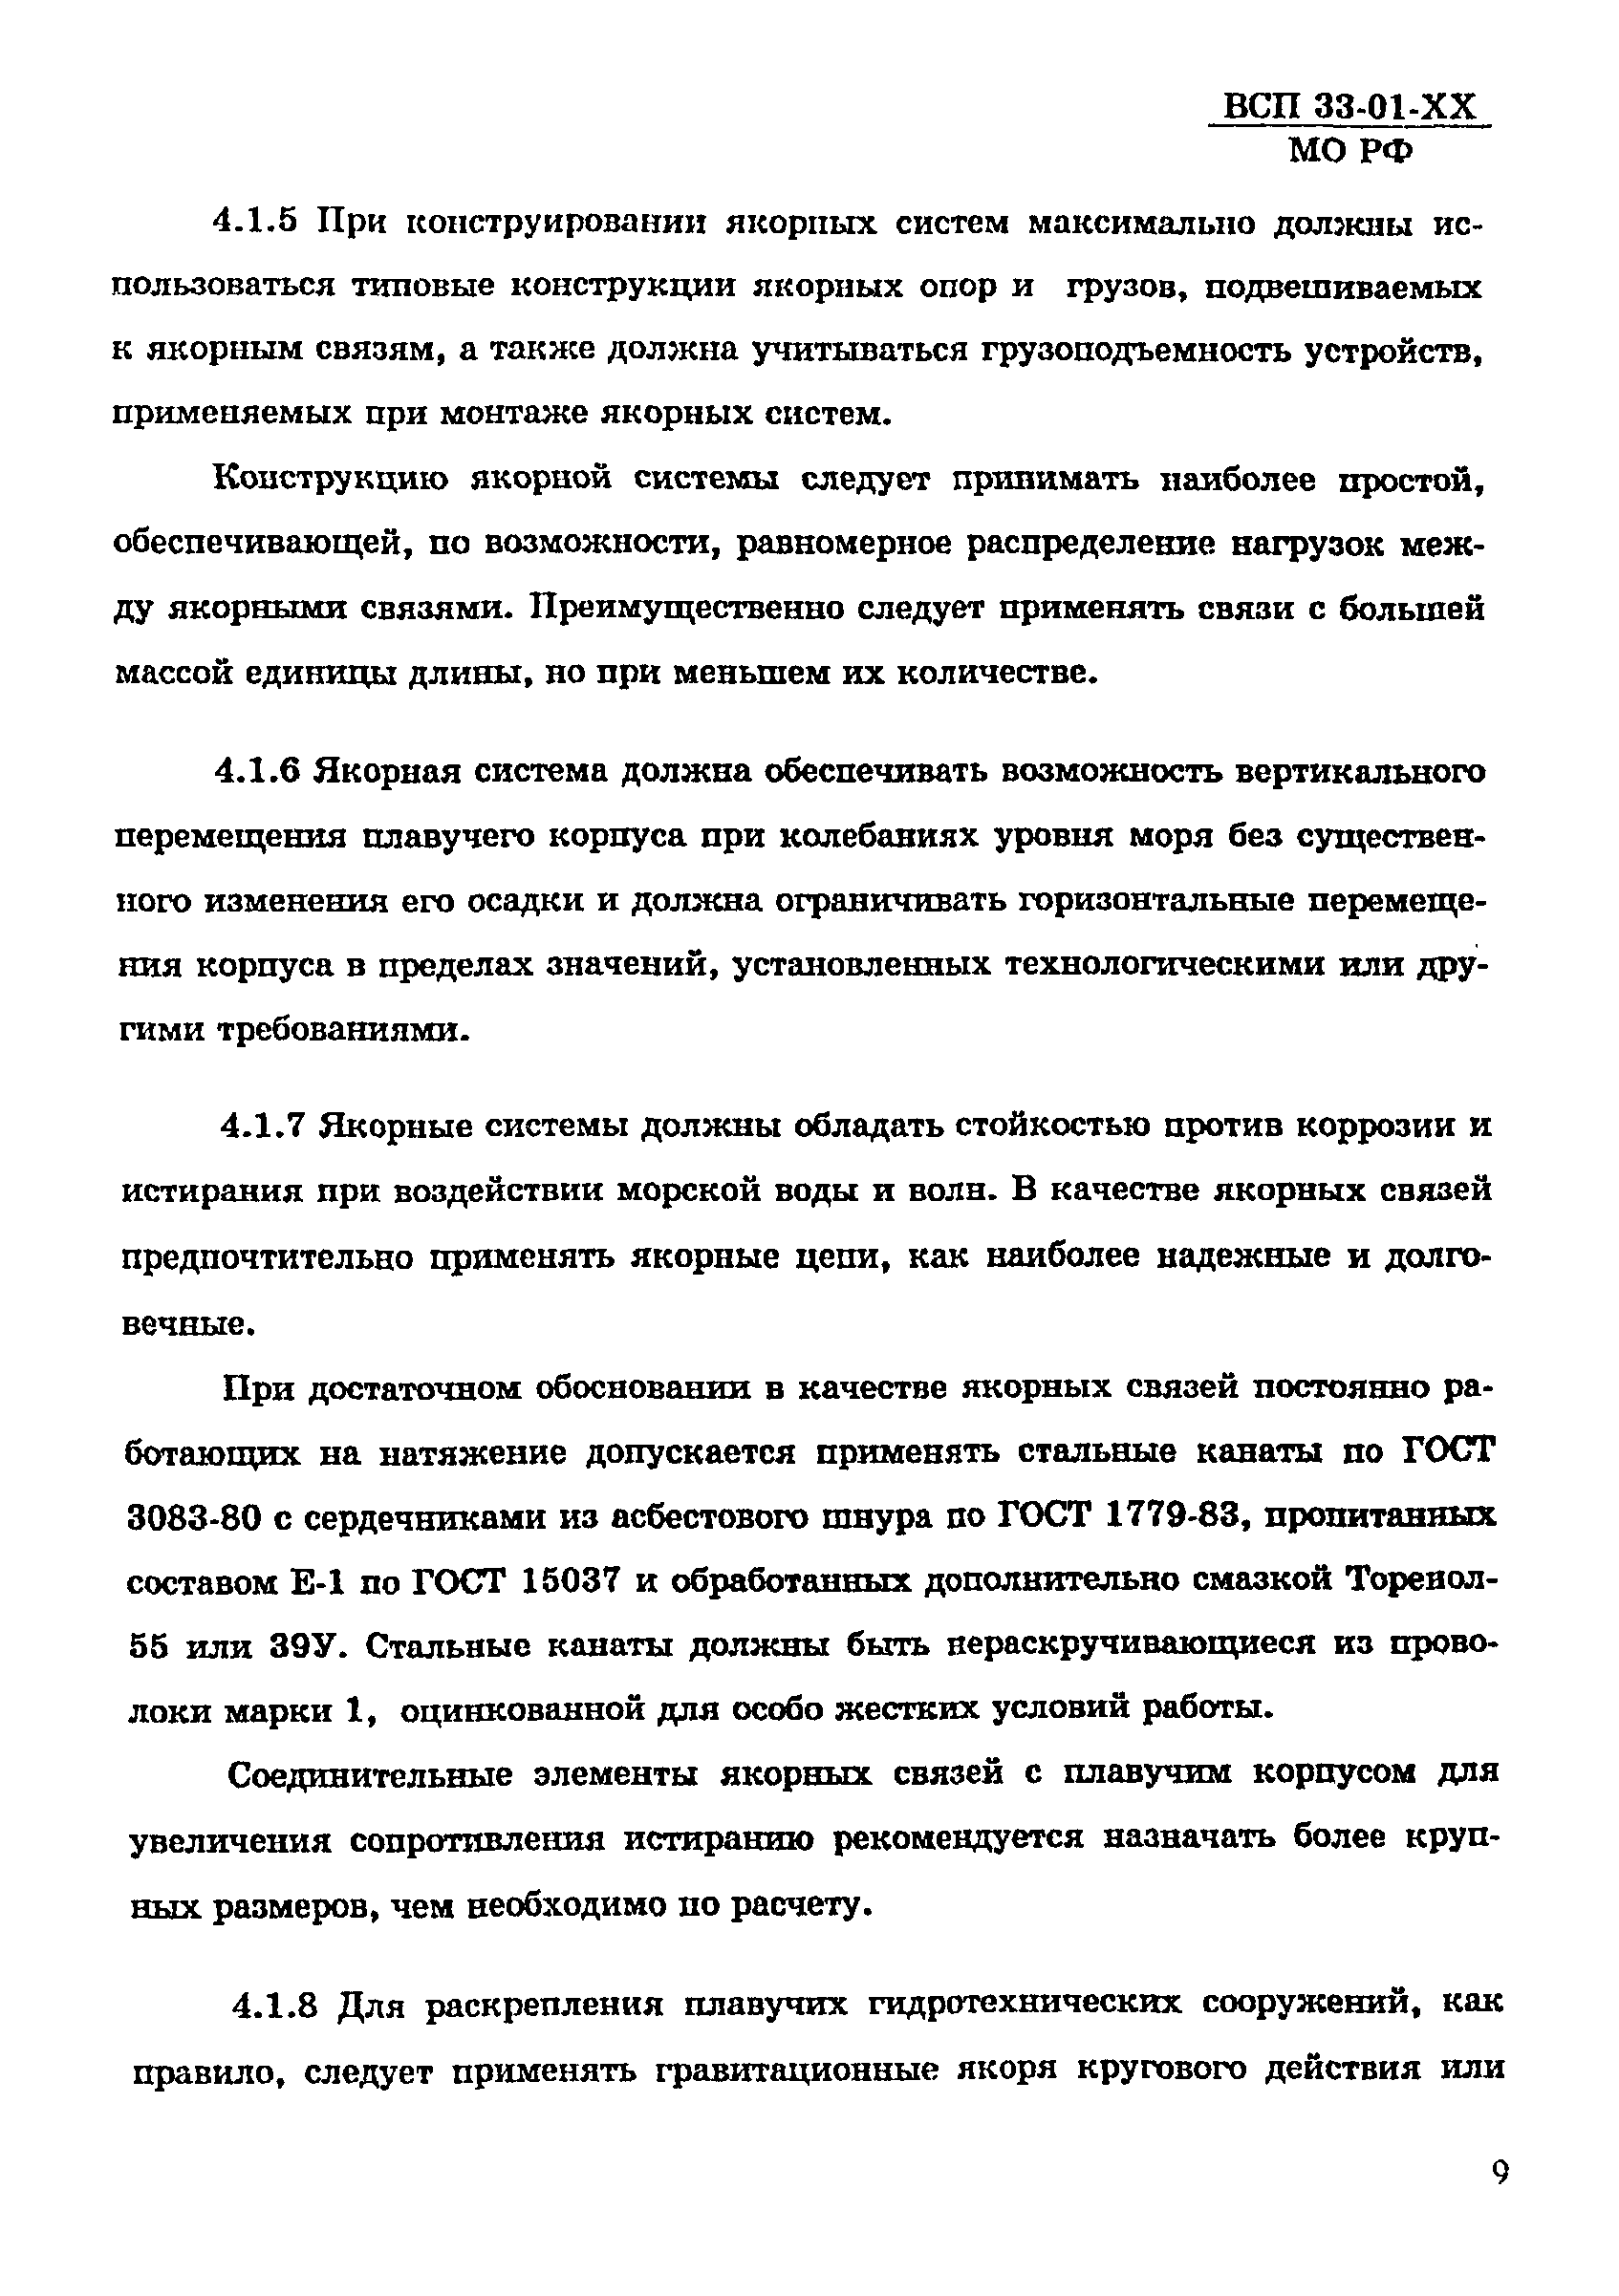 ВСП 33-01-99 МО РФ